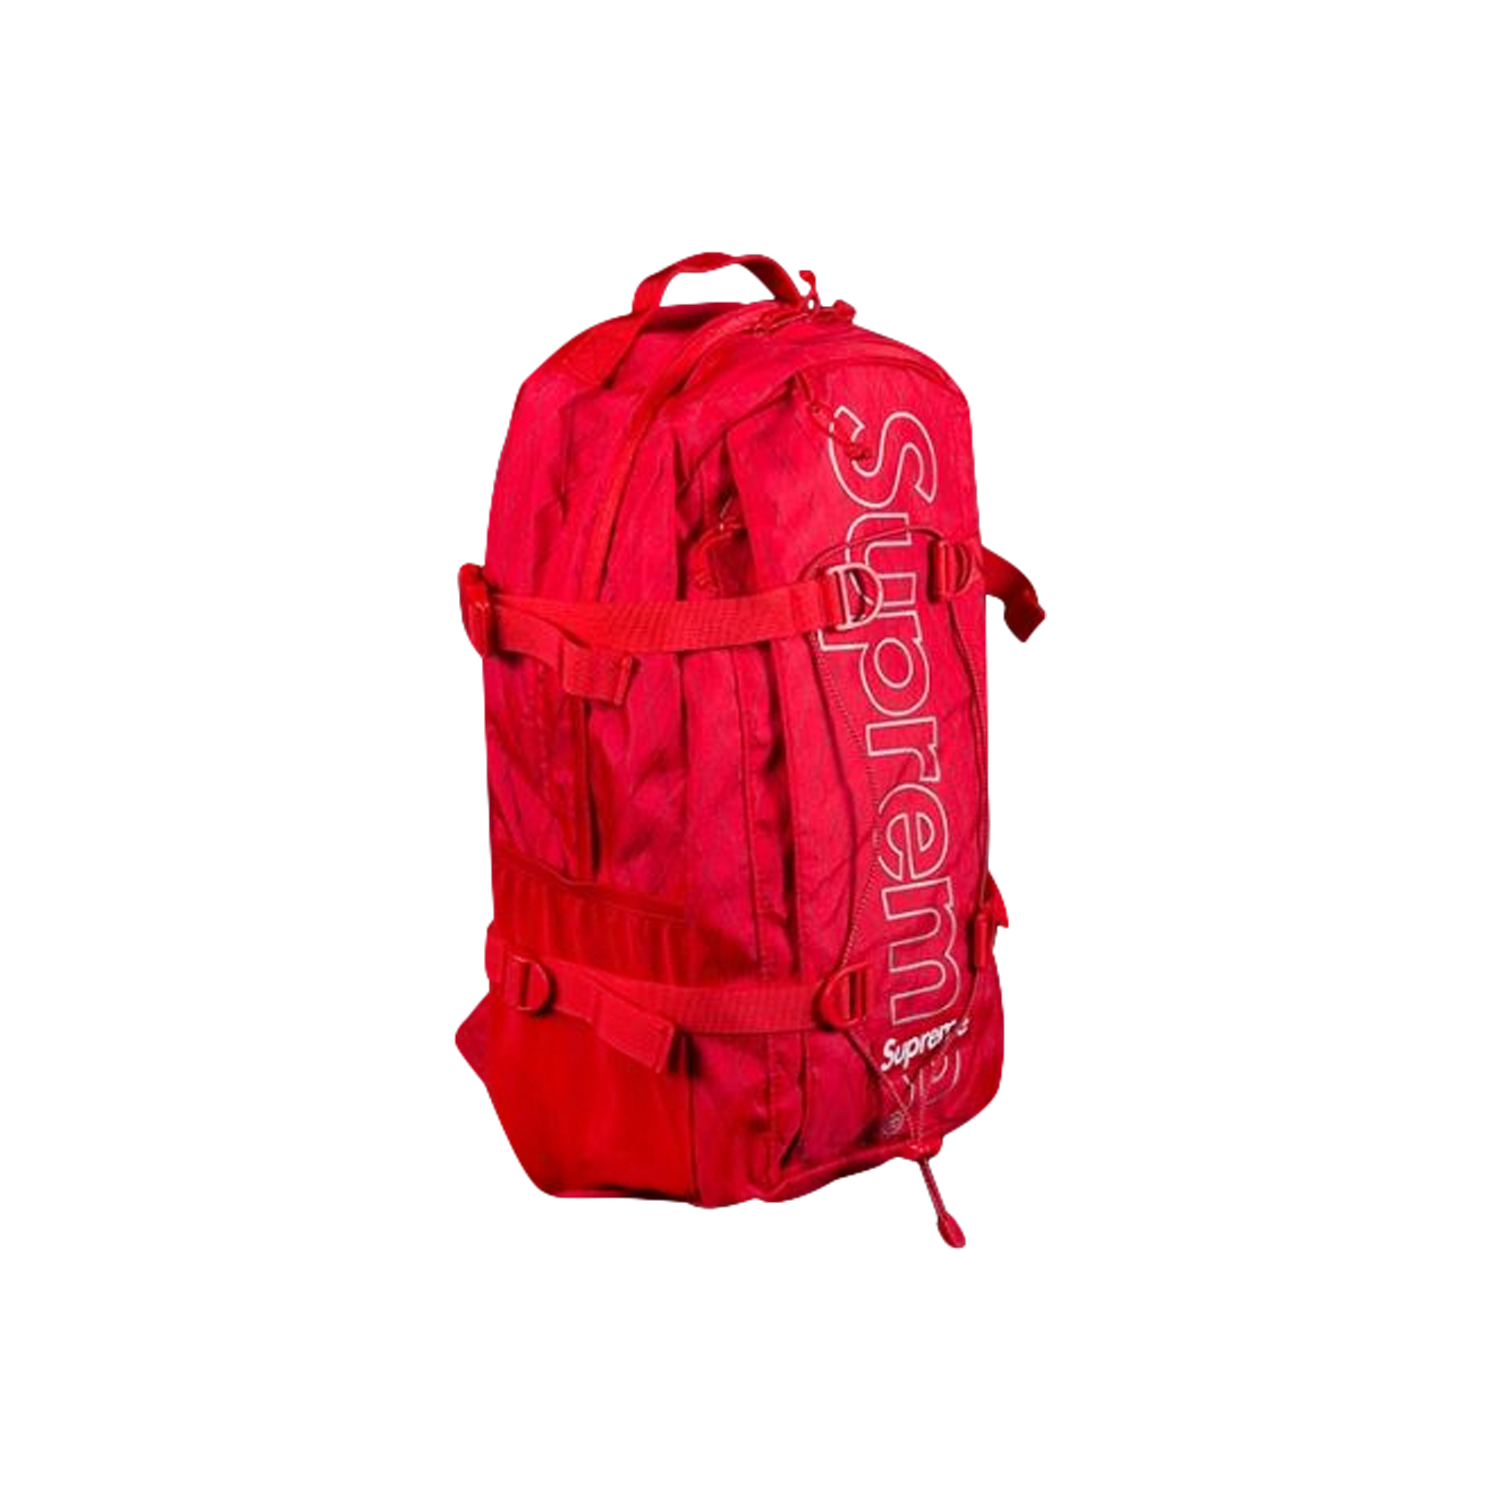 Supreme Backpack 'Red'